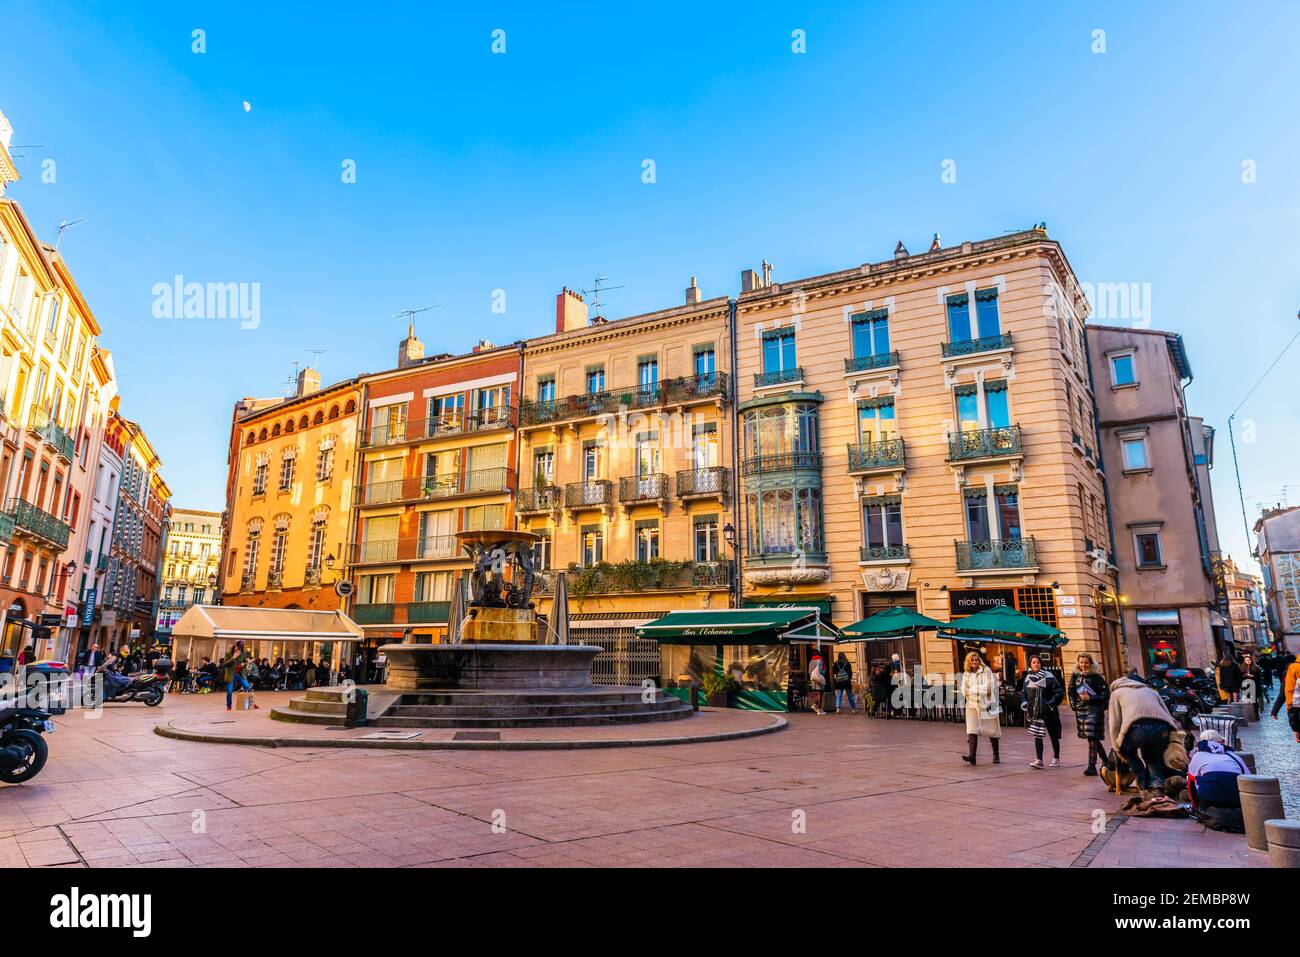 Fountain and buildings Place de la Trinite in Toulouse in Occitania, France Stock Photo